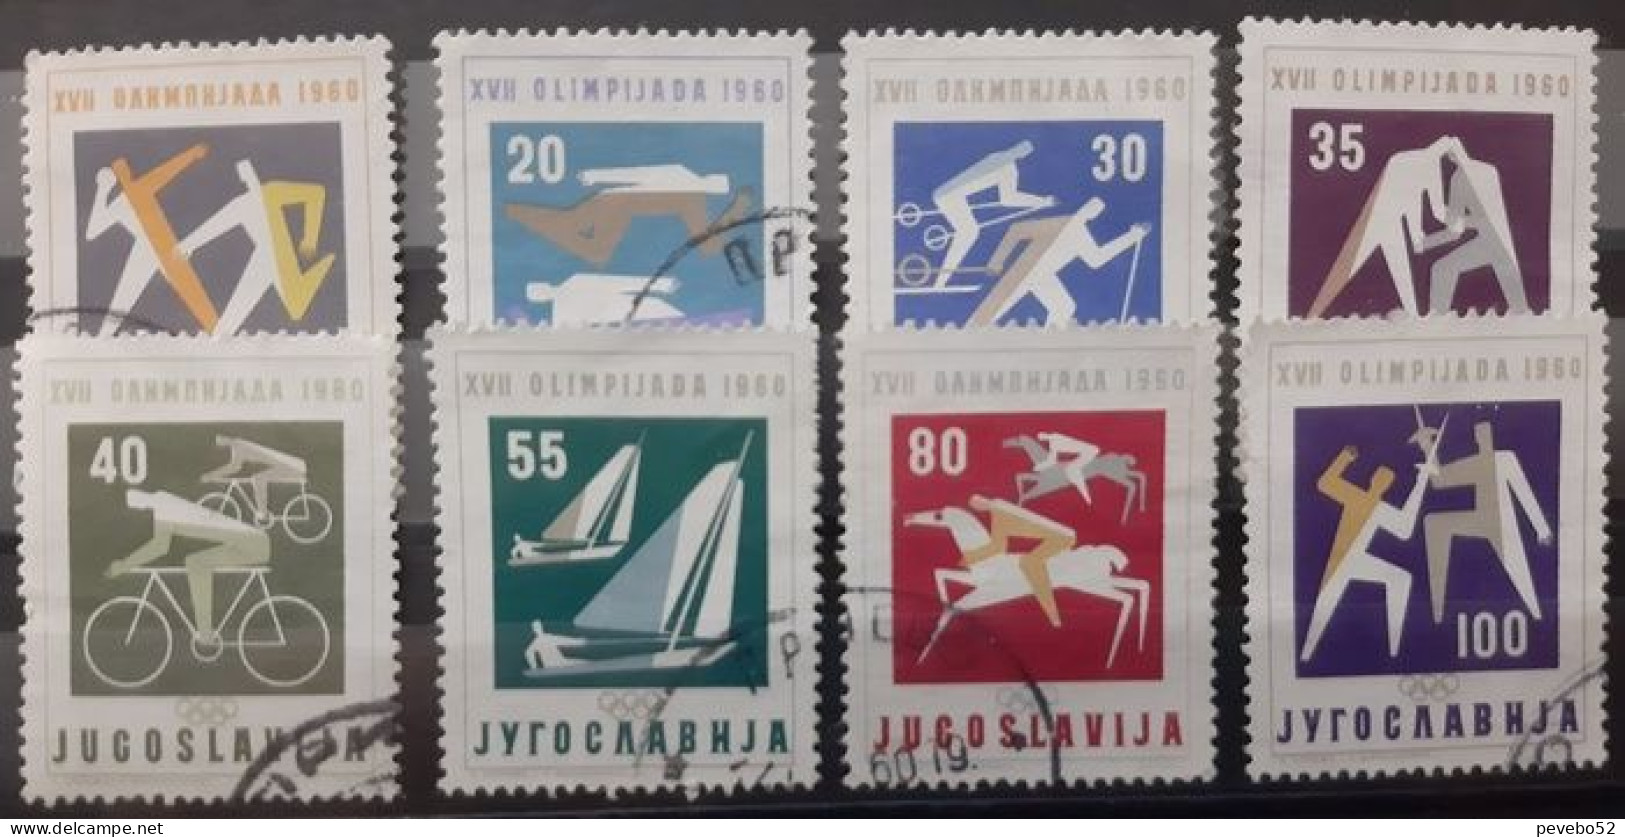 YUGOSLAVIA 1960 - Olympic Games - Rome, Italy USED - Usados